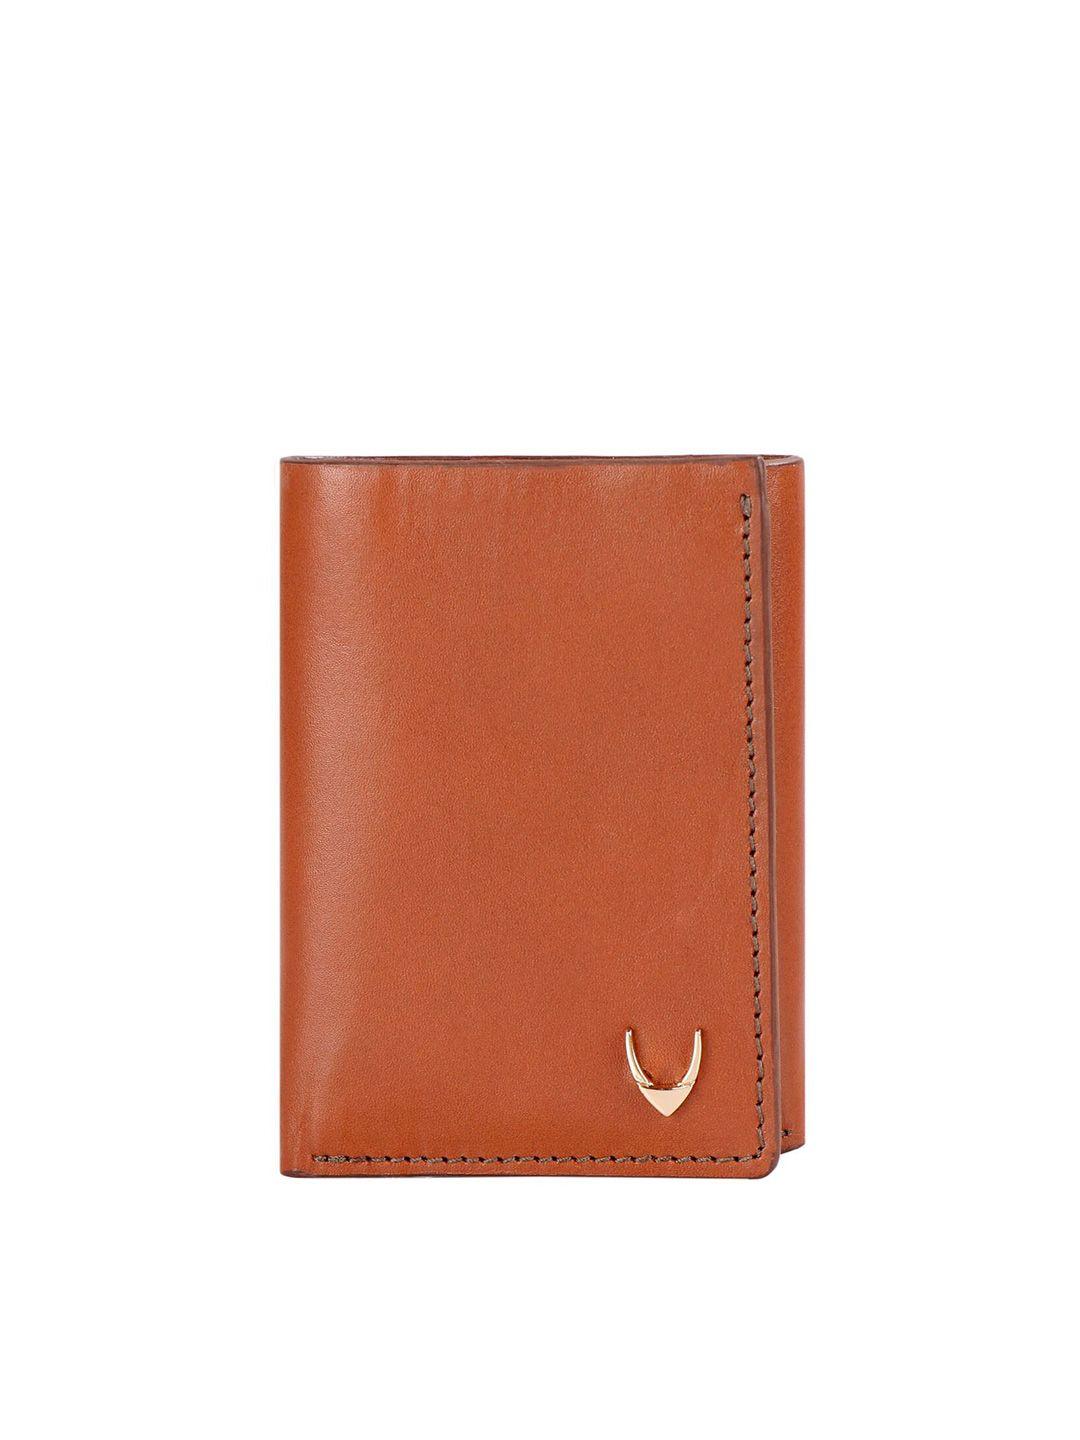 hidesign men tan three fold leather wallet